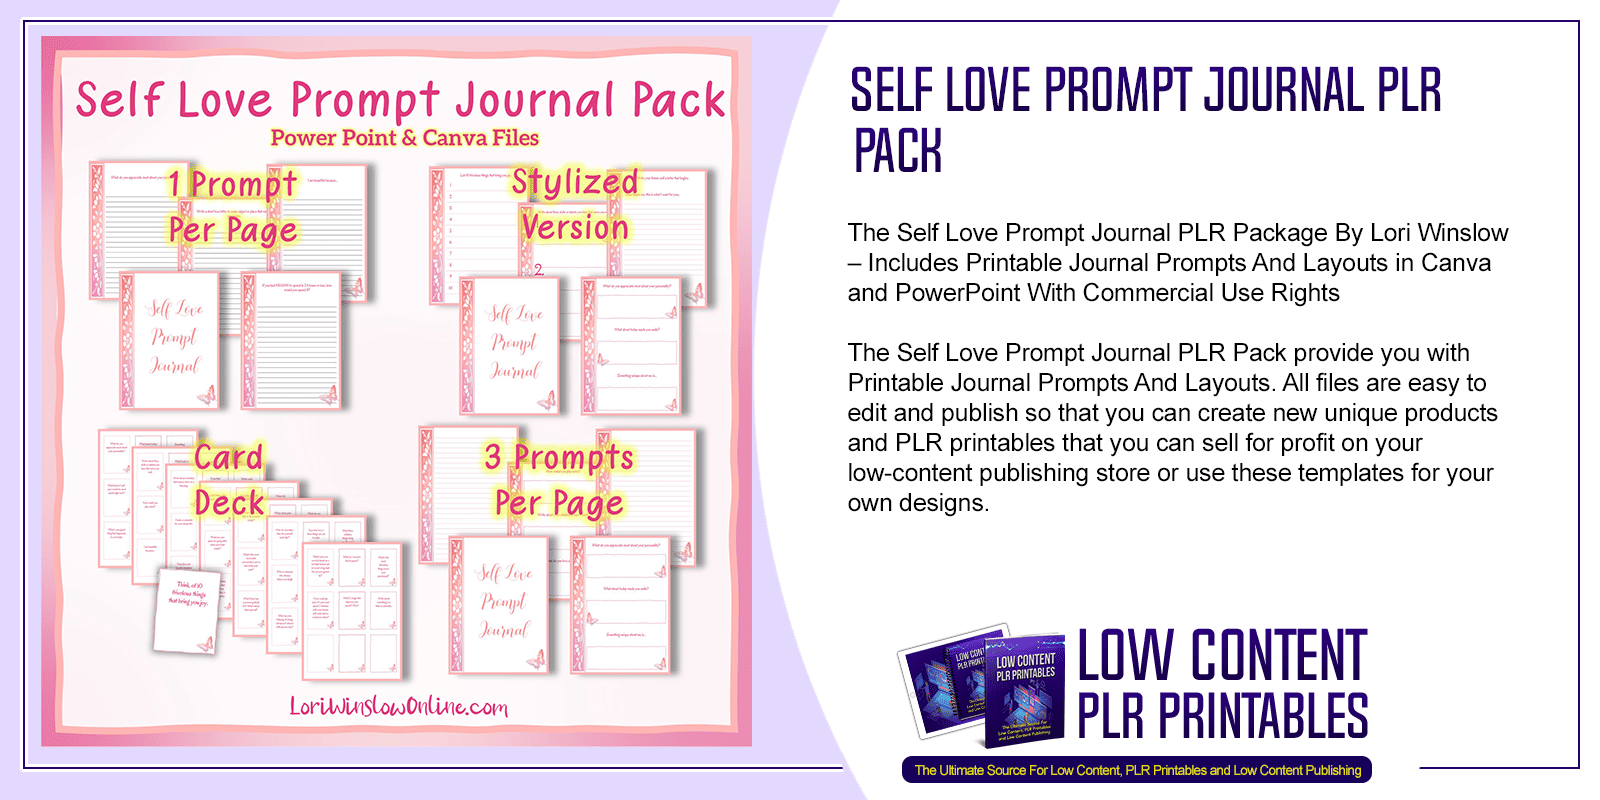 Self Love Prompt Journal PLR Pack